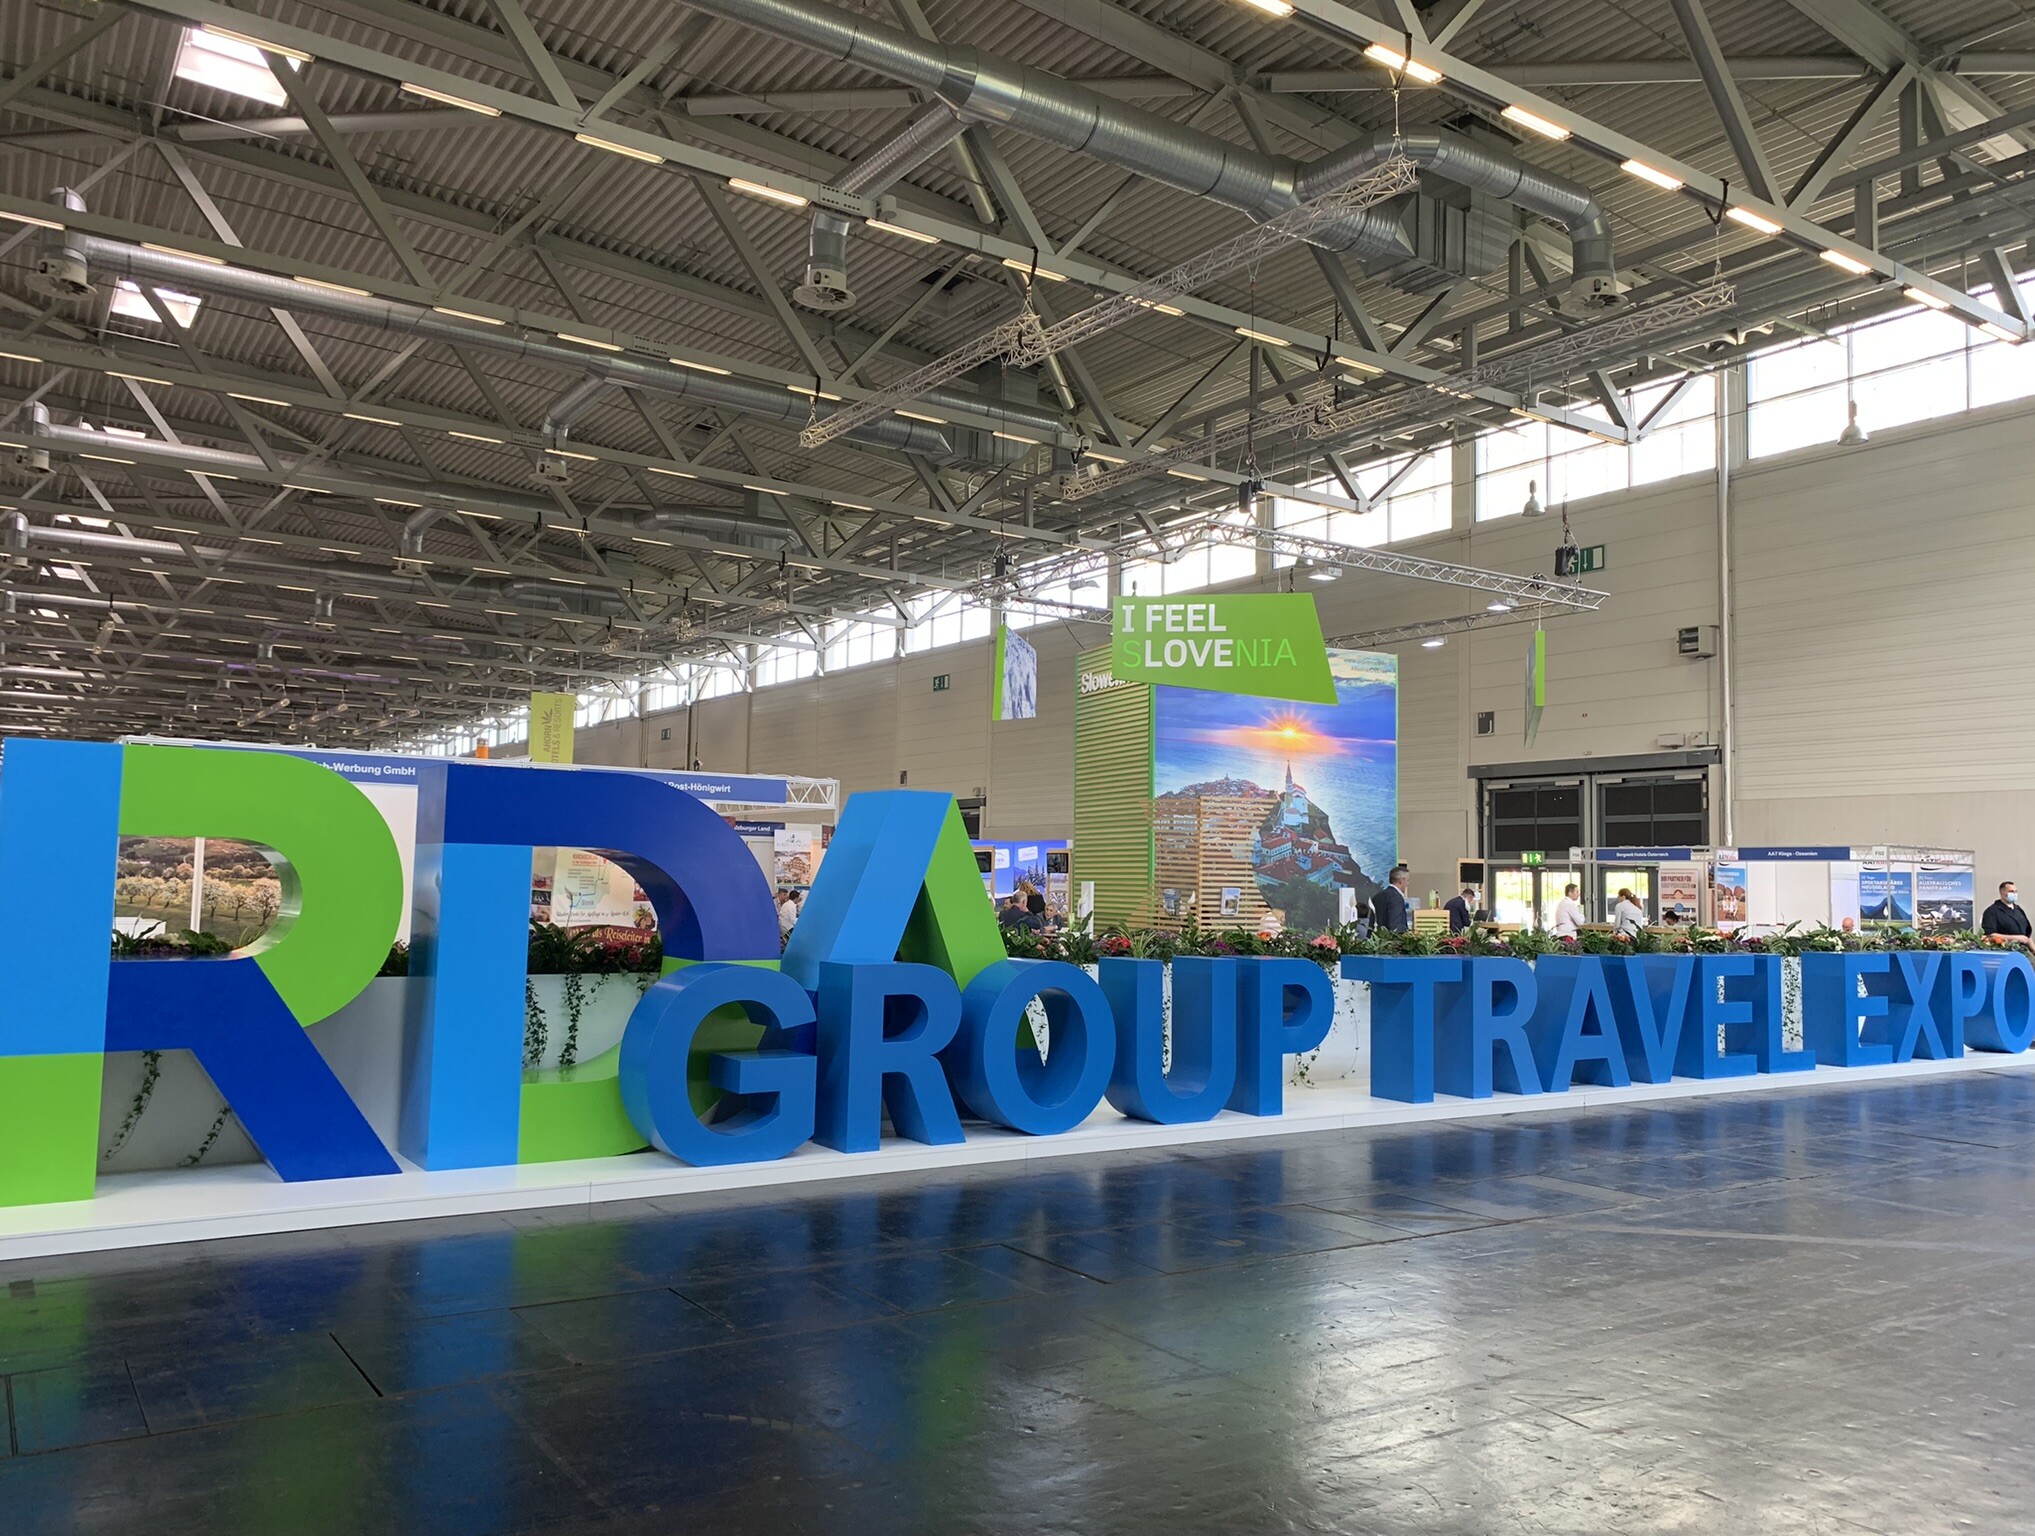 Schriftzug "RDA Group Travel Expo" in den Hallen der Koelnmesse 